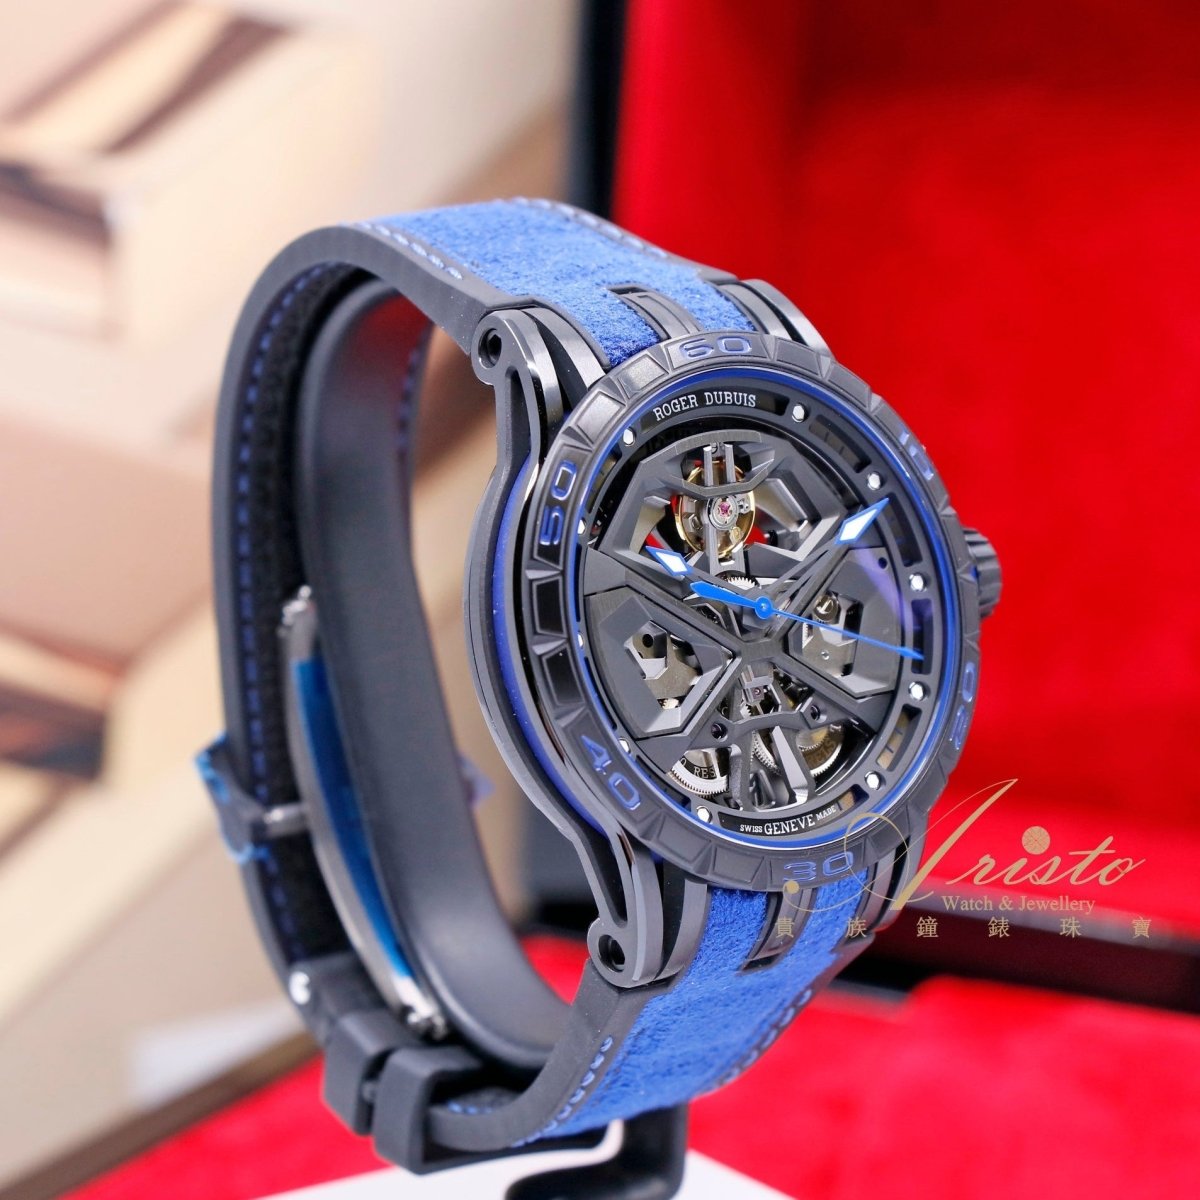 ROGER DUBUIS DBEX0749 Watches- Aristo Watch & Jewellery